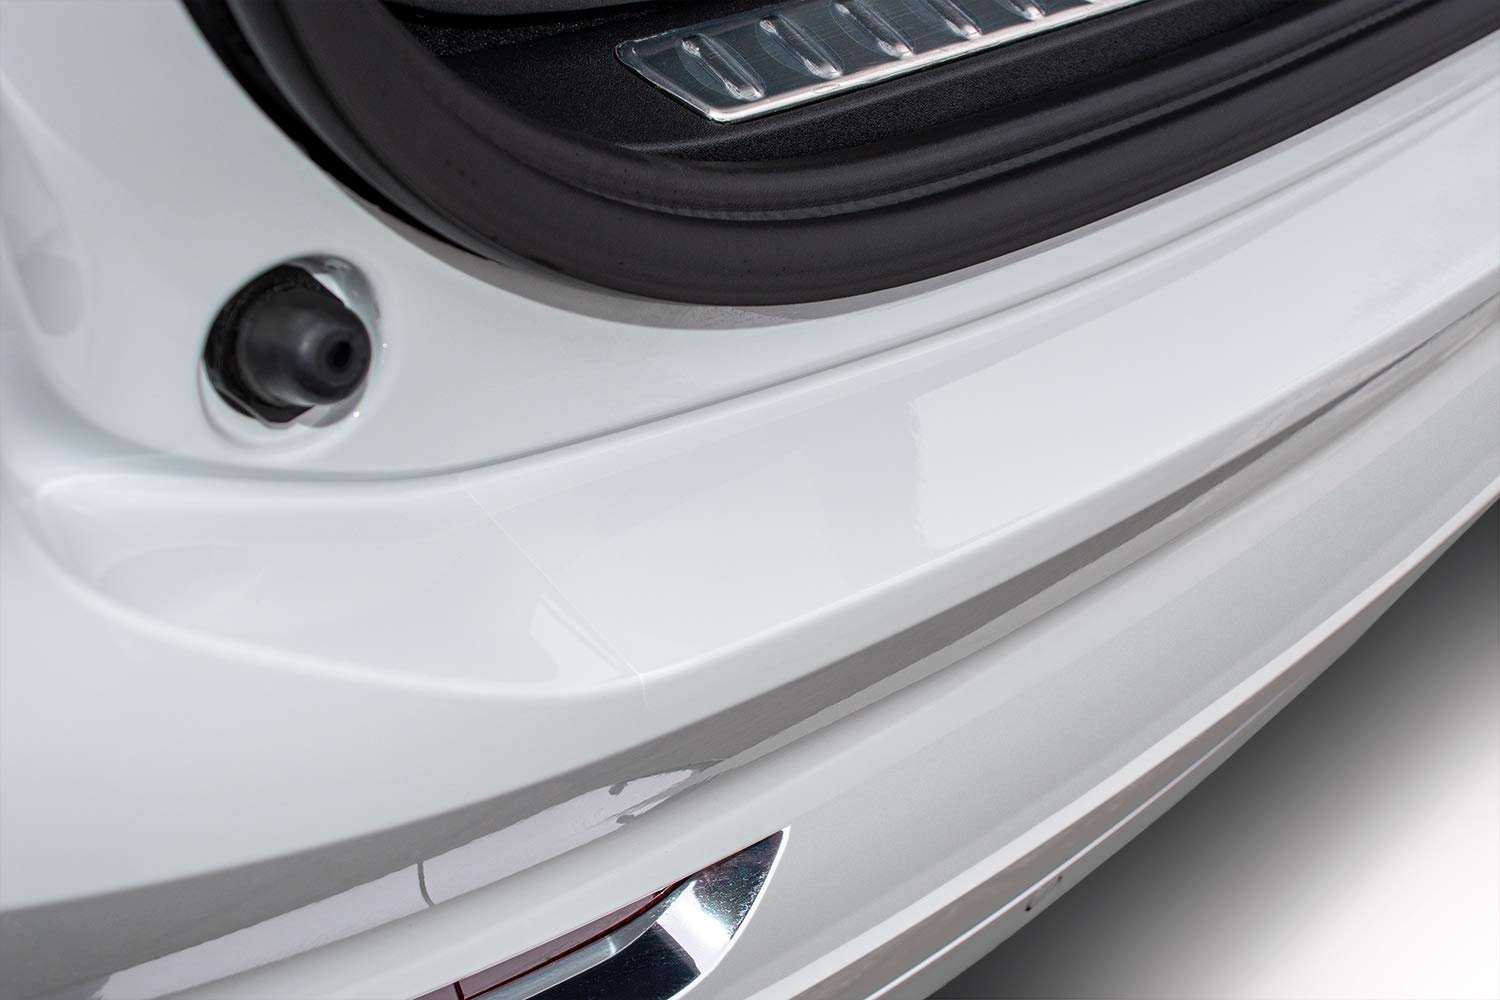 teileplus24 OL172 Ladekantenschutz Folie kompatibel mit Hyundai i30 Kombi 2021- Profi-Rakel, Farbe:Transparent von teileplus24